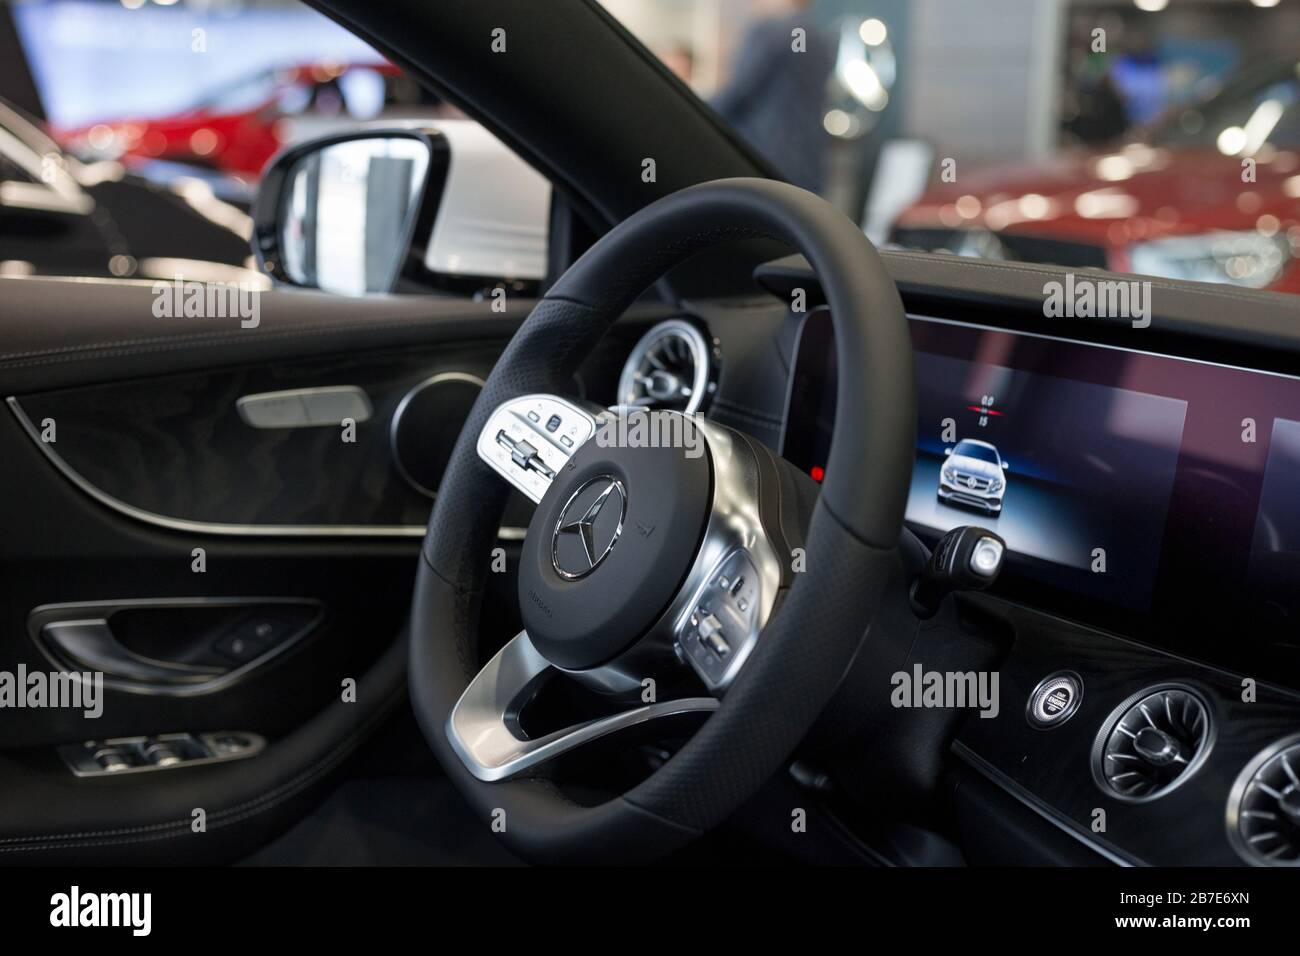 Russia, Izhevsk - February 20, 2020: Mercedes-Benz showroom. Interior of new modern E 200 coupe car. Famous world brand. Prestigious vehicles. Stock Photo